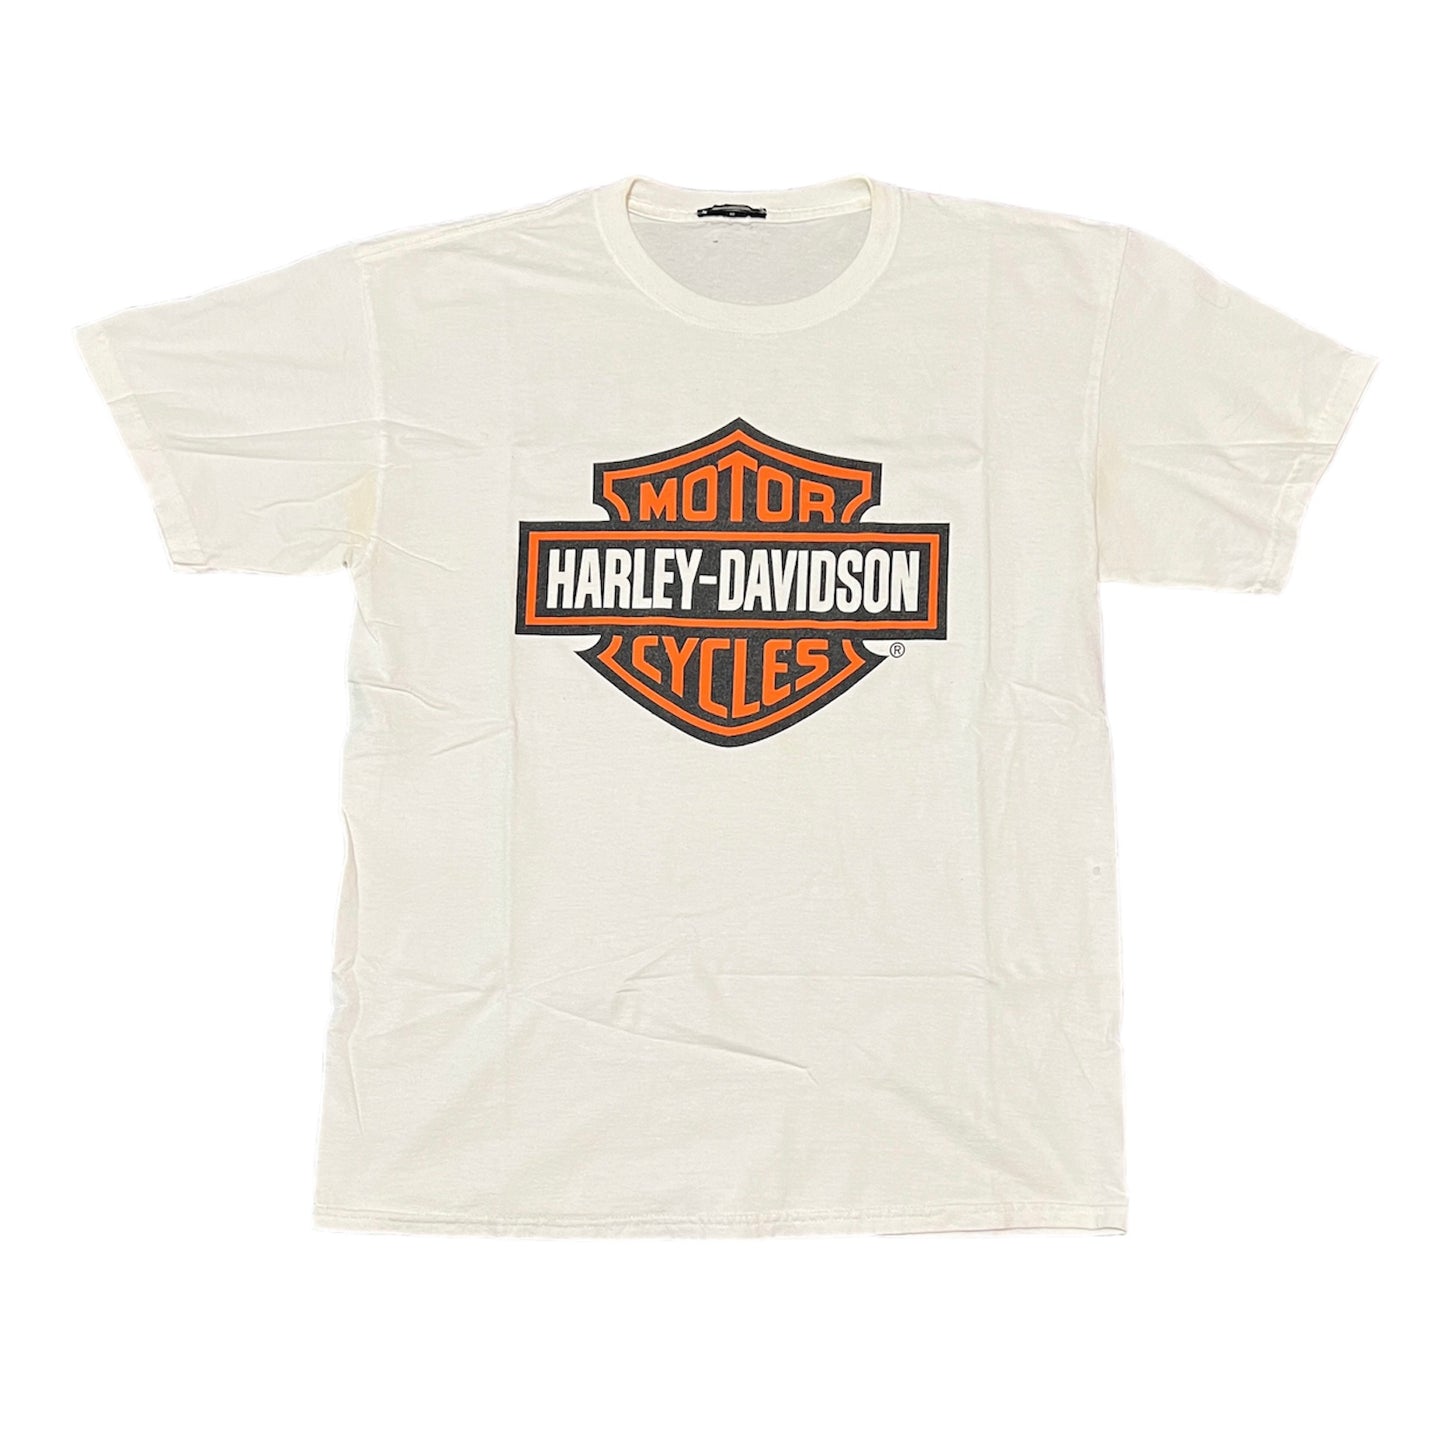 Harley Davidson Museum Milwaukee, Wisconsin T-Shirt Size Large